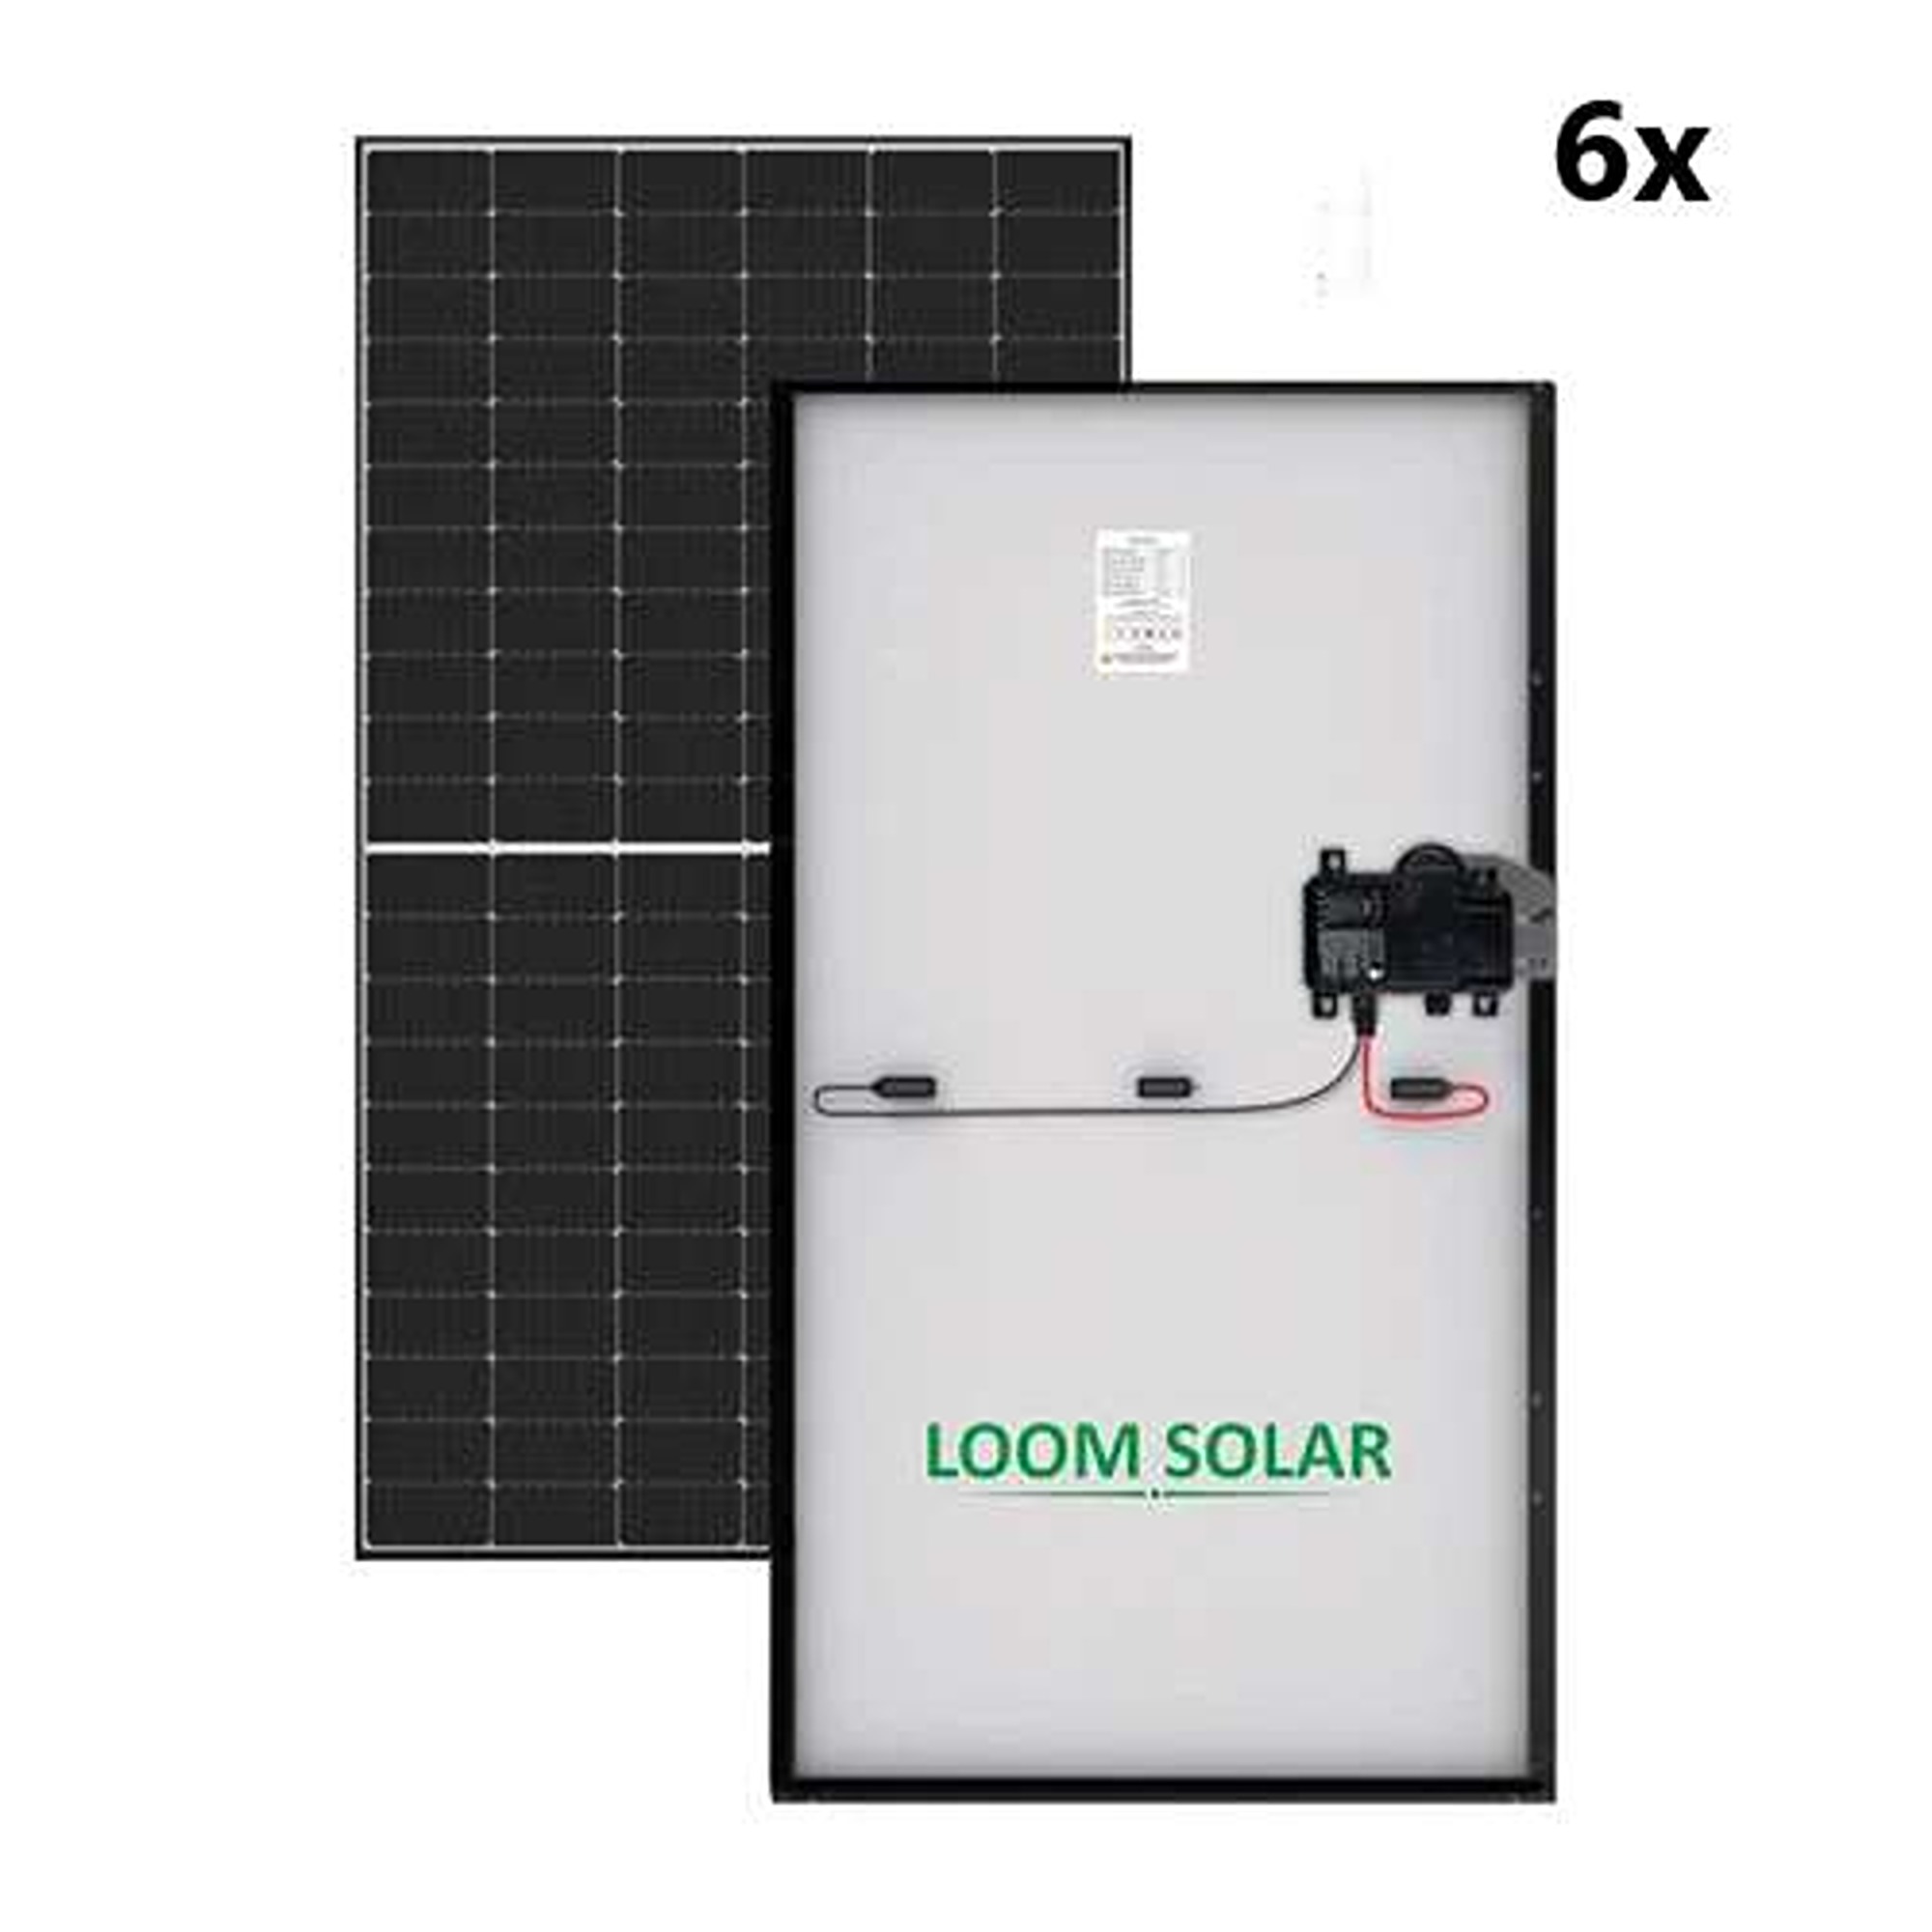 Loom solar 3 kw Grid Connected AC Module